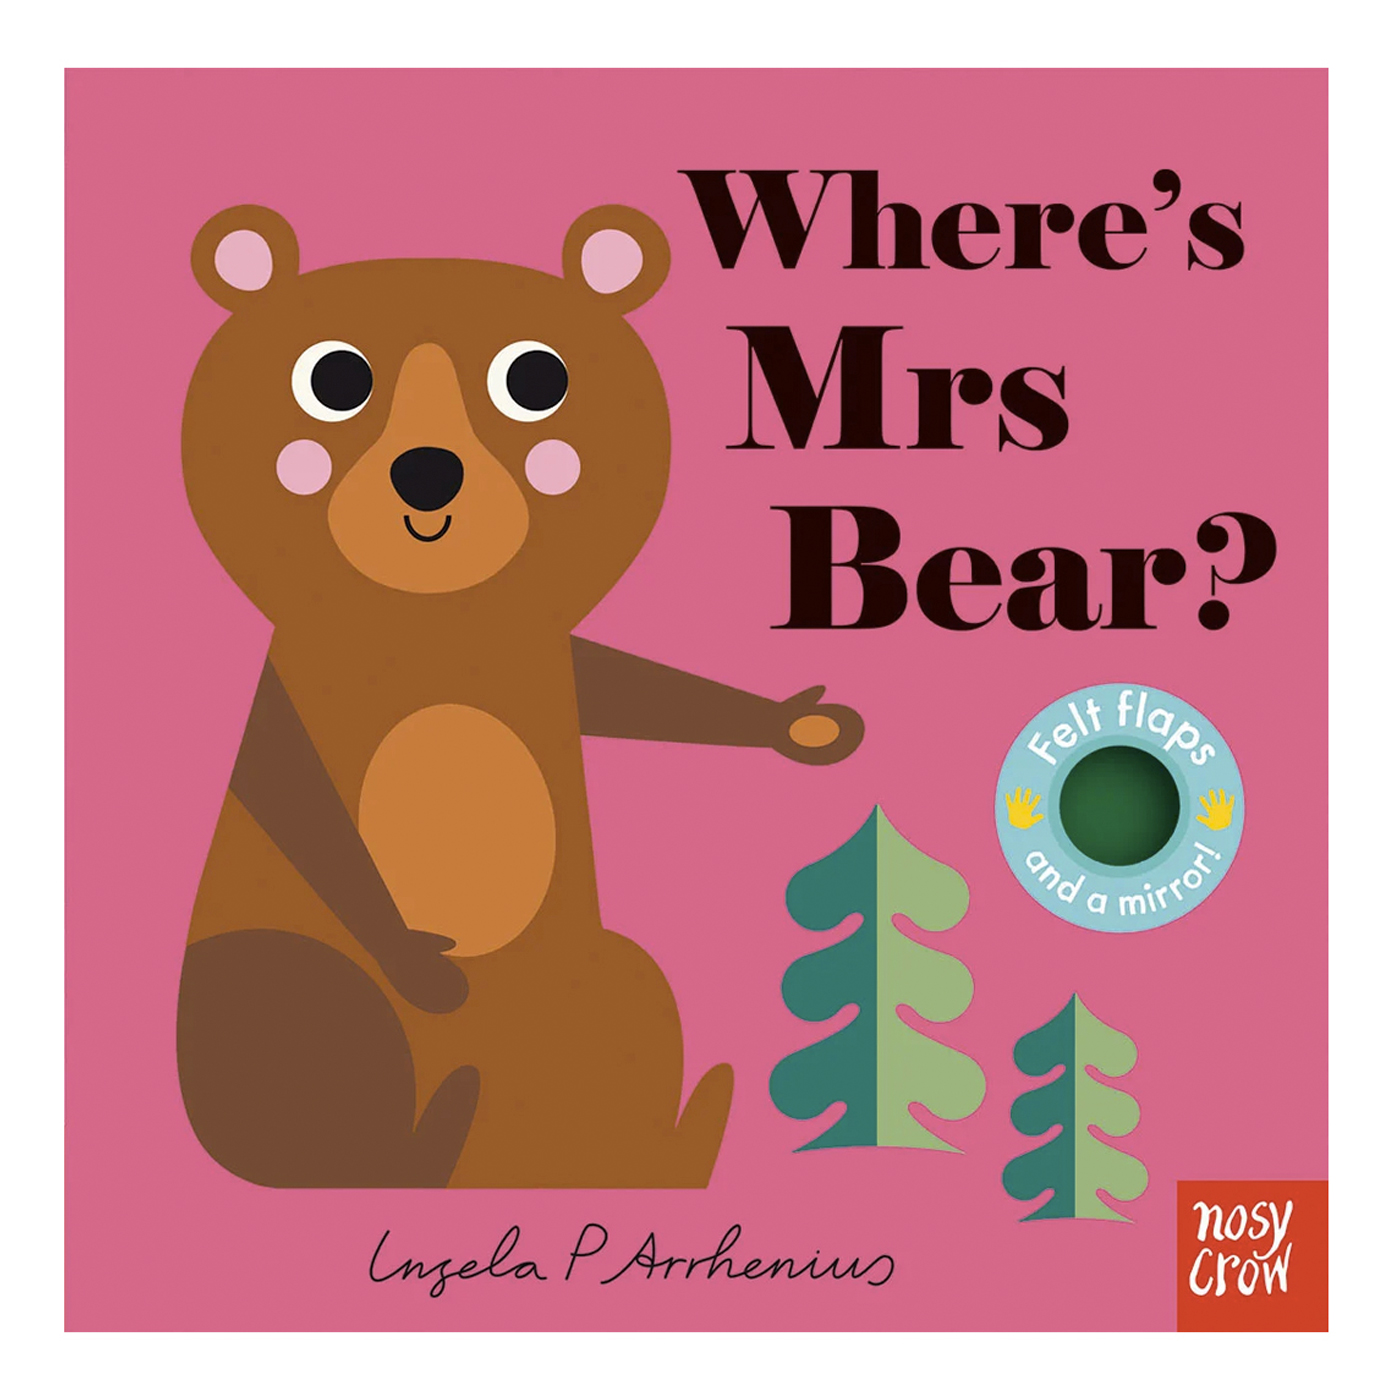  Where’s Mrs Bear?